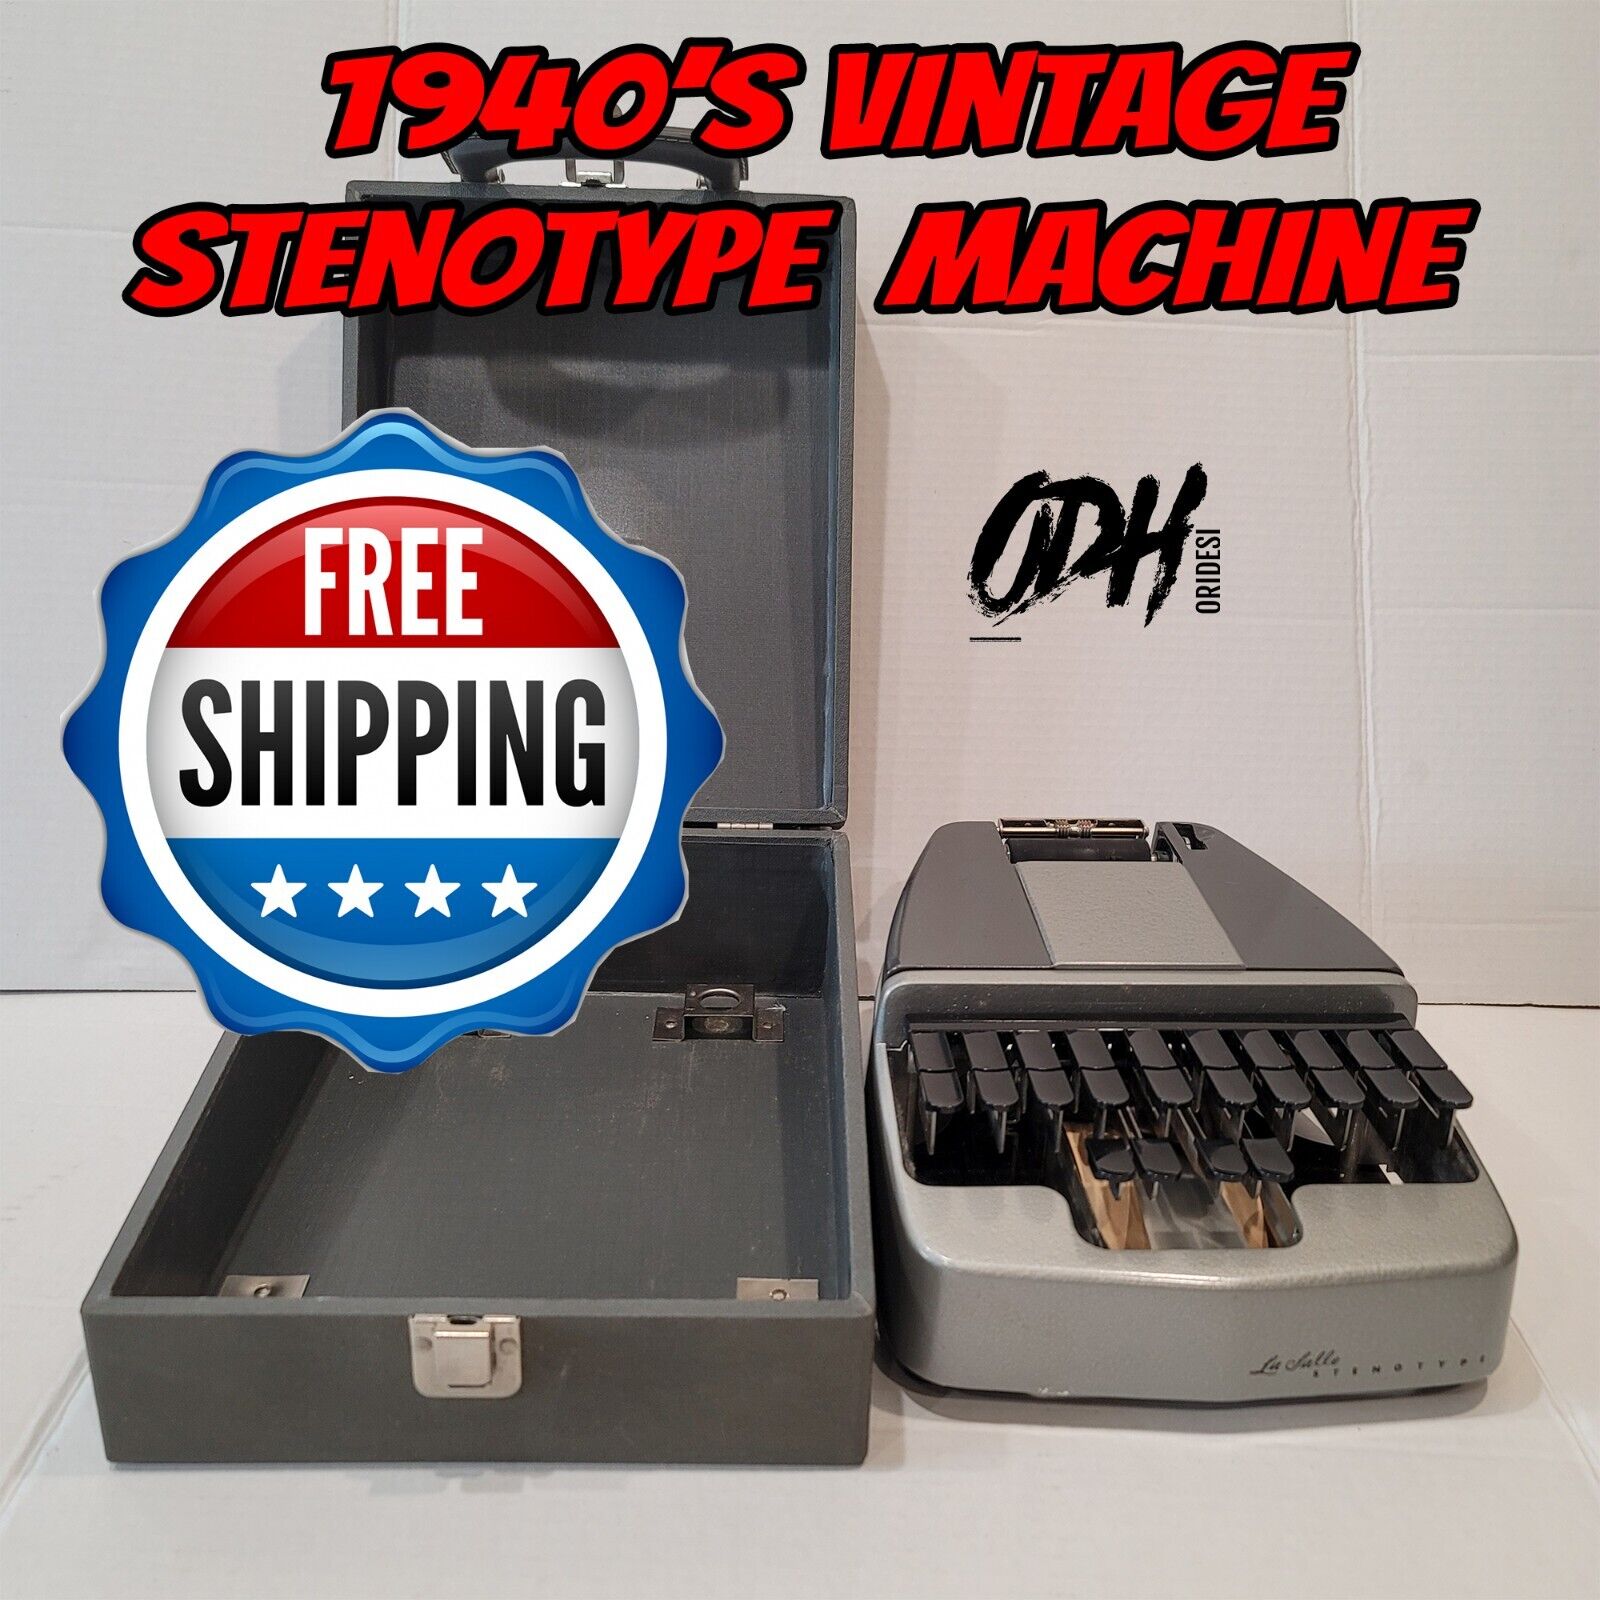 1940s Vintage Stenotype Machine Court Reporter Shorthand Steno Writer Srenograph